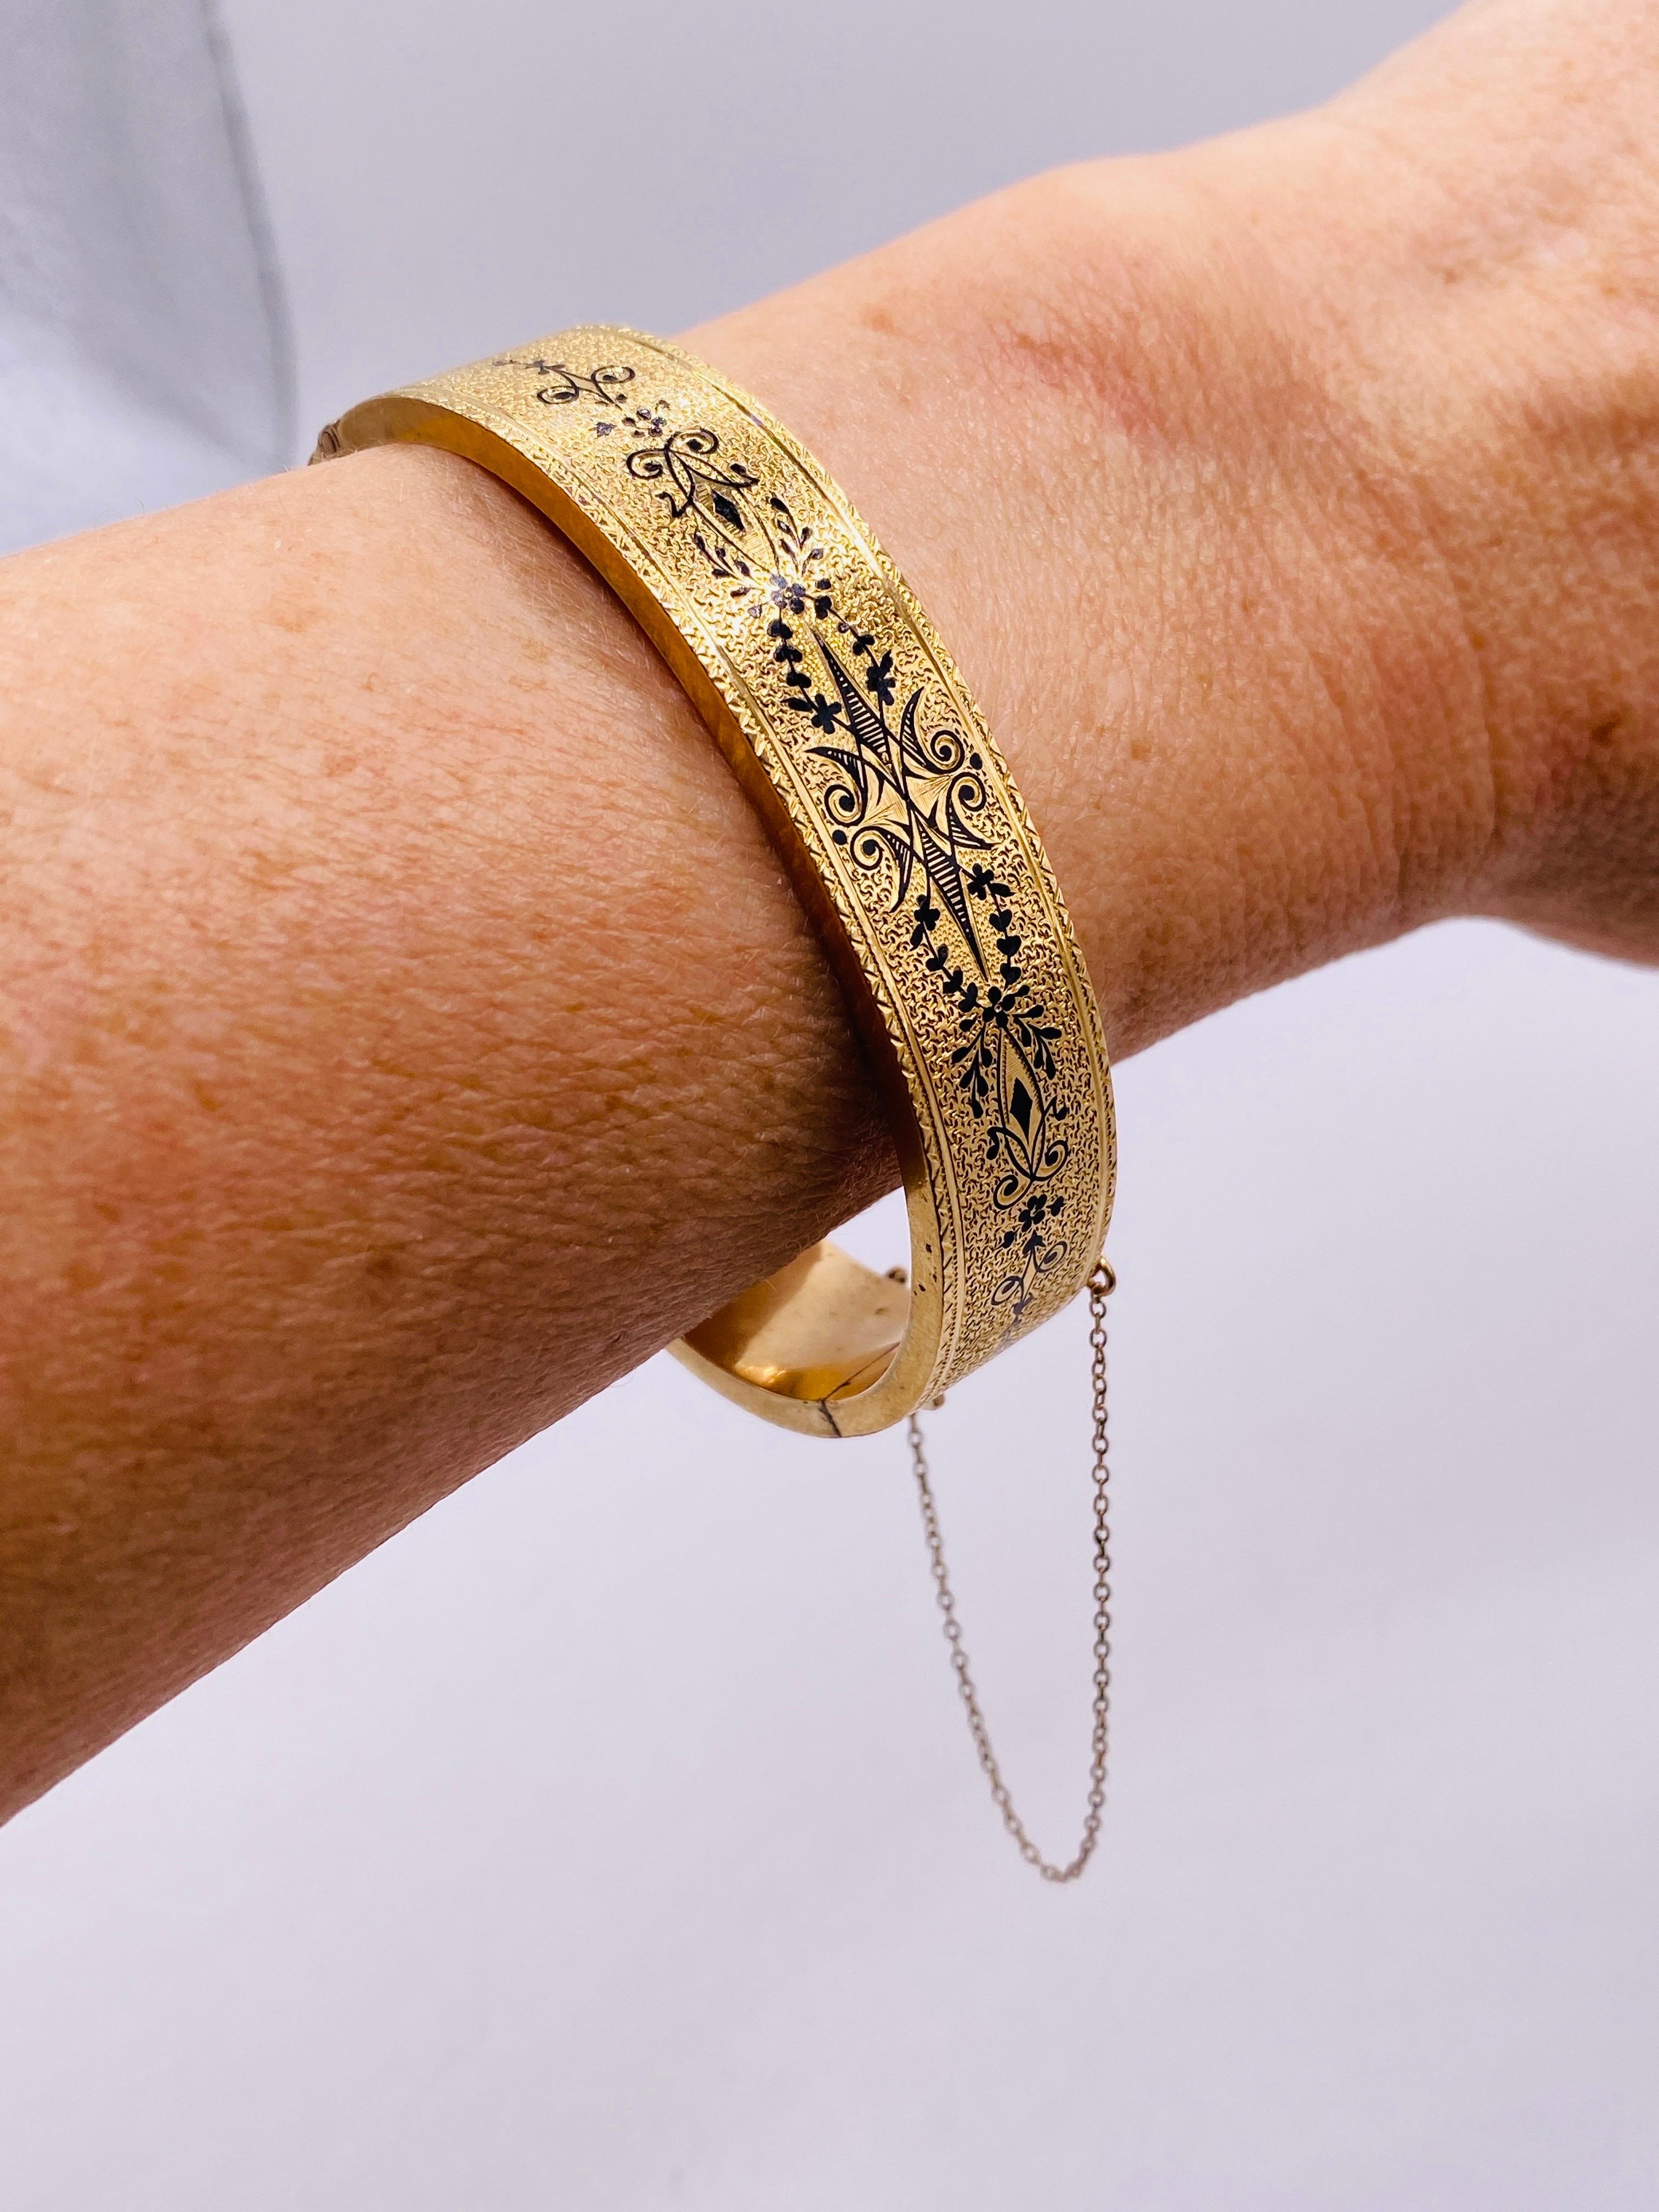 Victorian wedding bracelet 14k yellow gold and black enamel. 12.4Dwt